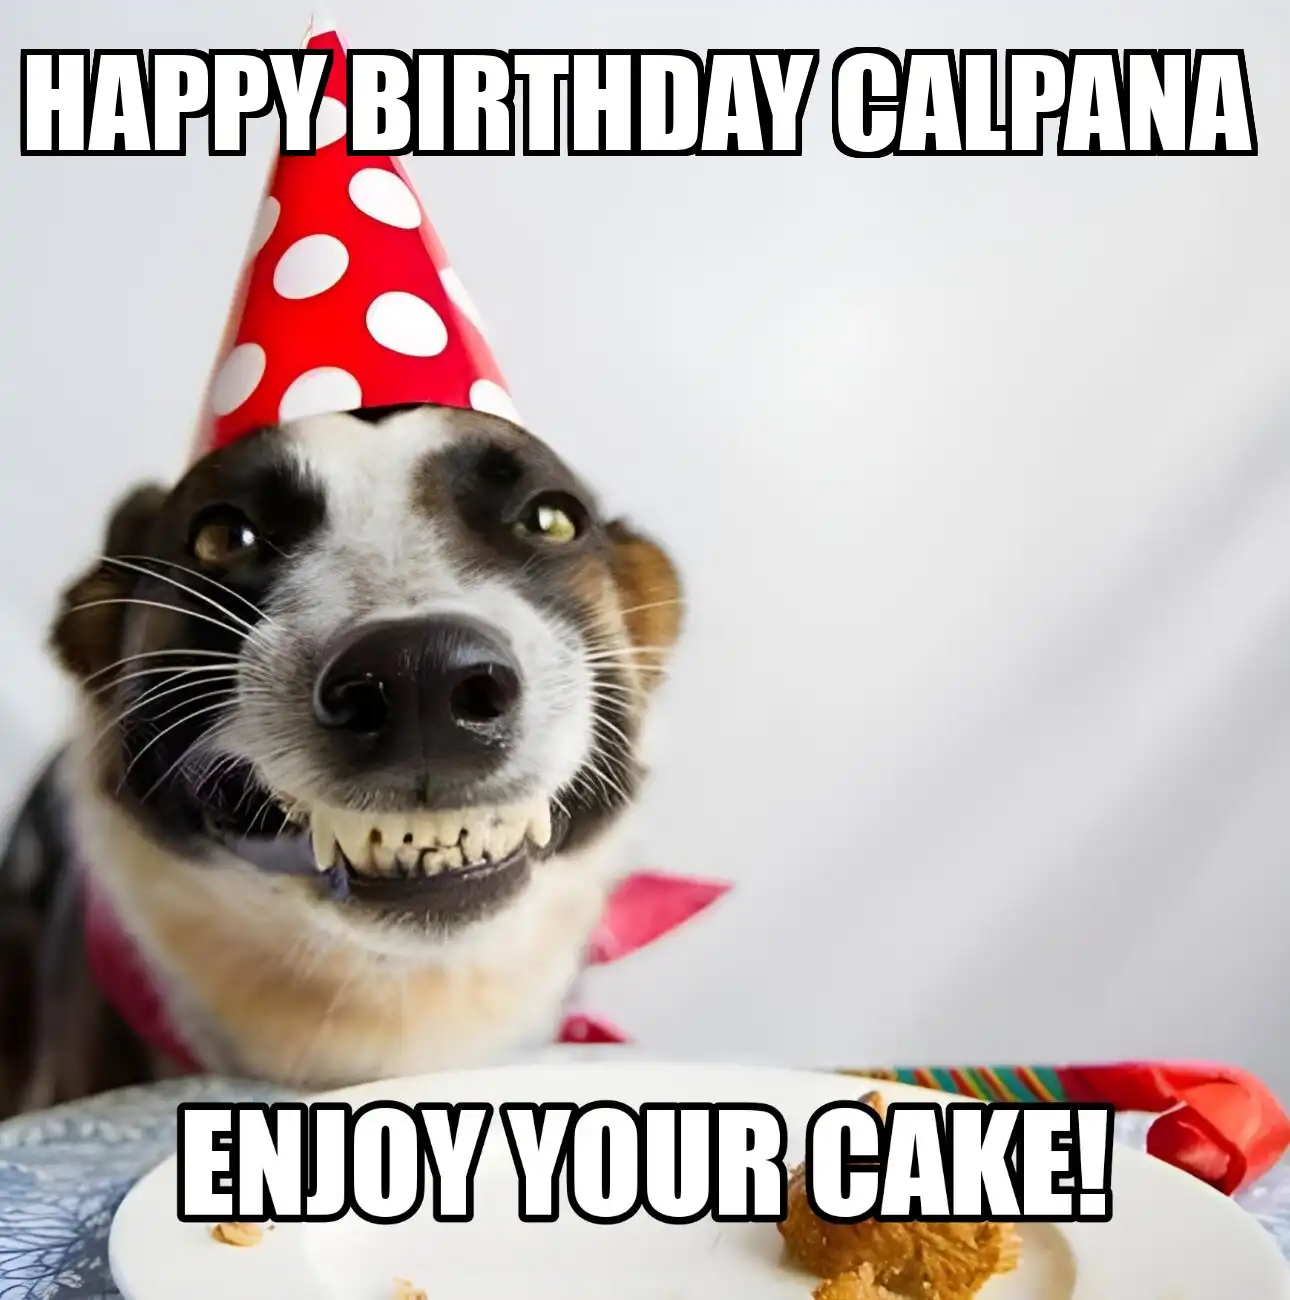 Happy Birthday Calpana Enjoy Your Cake Dog Meme